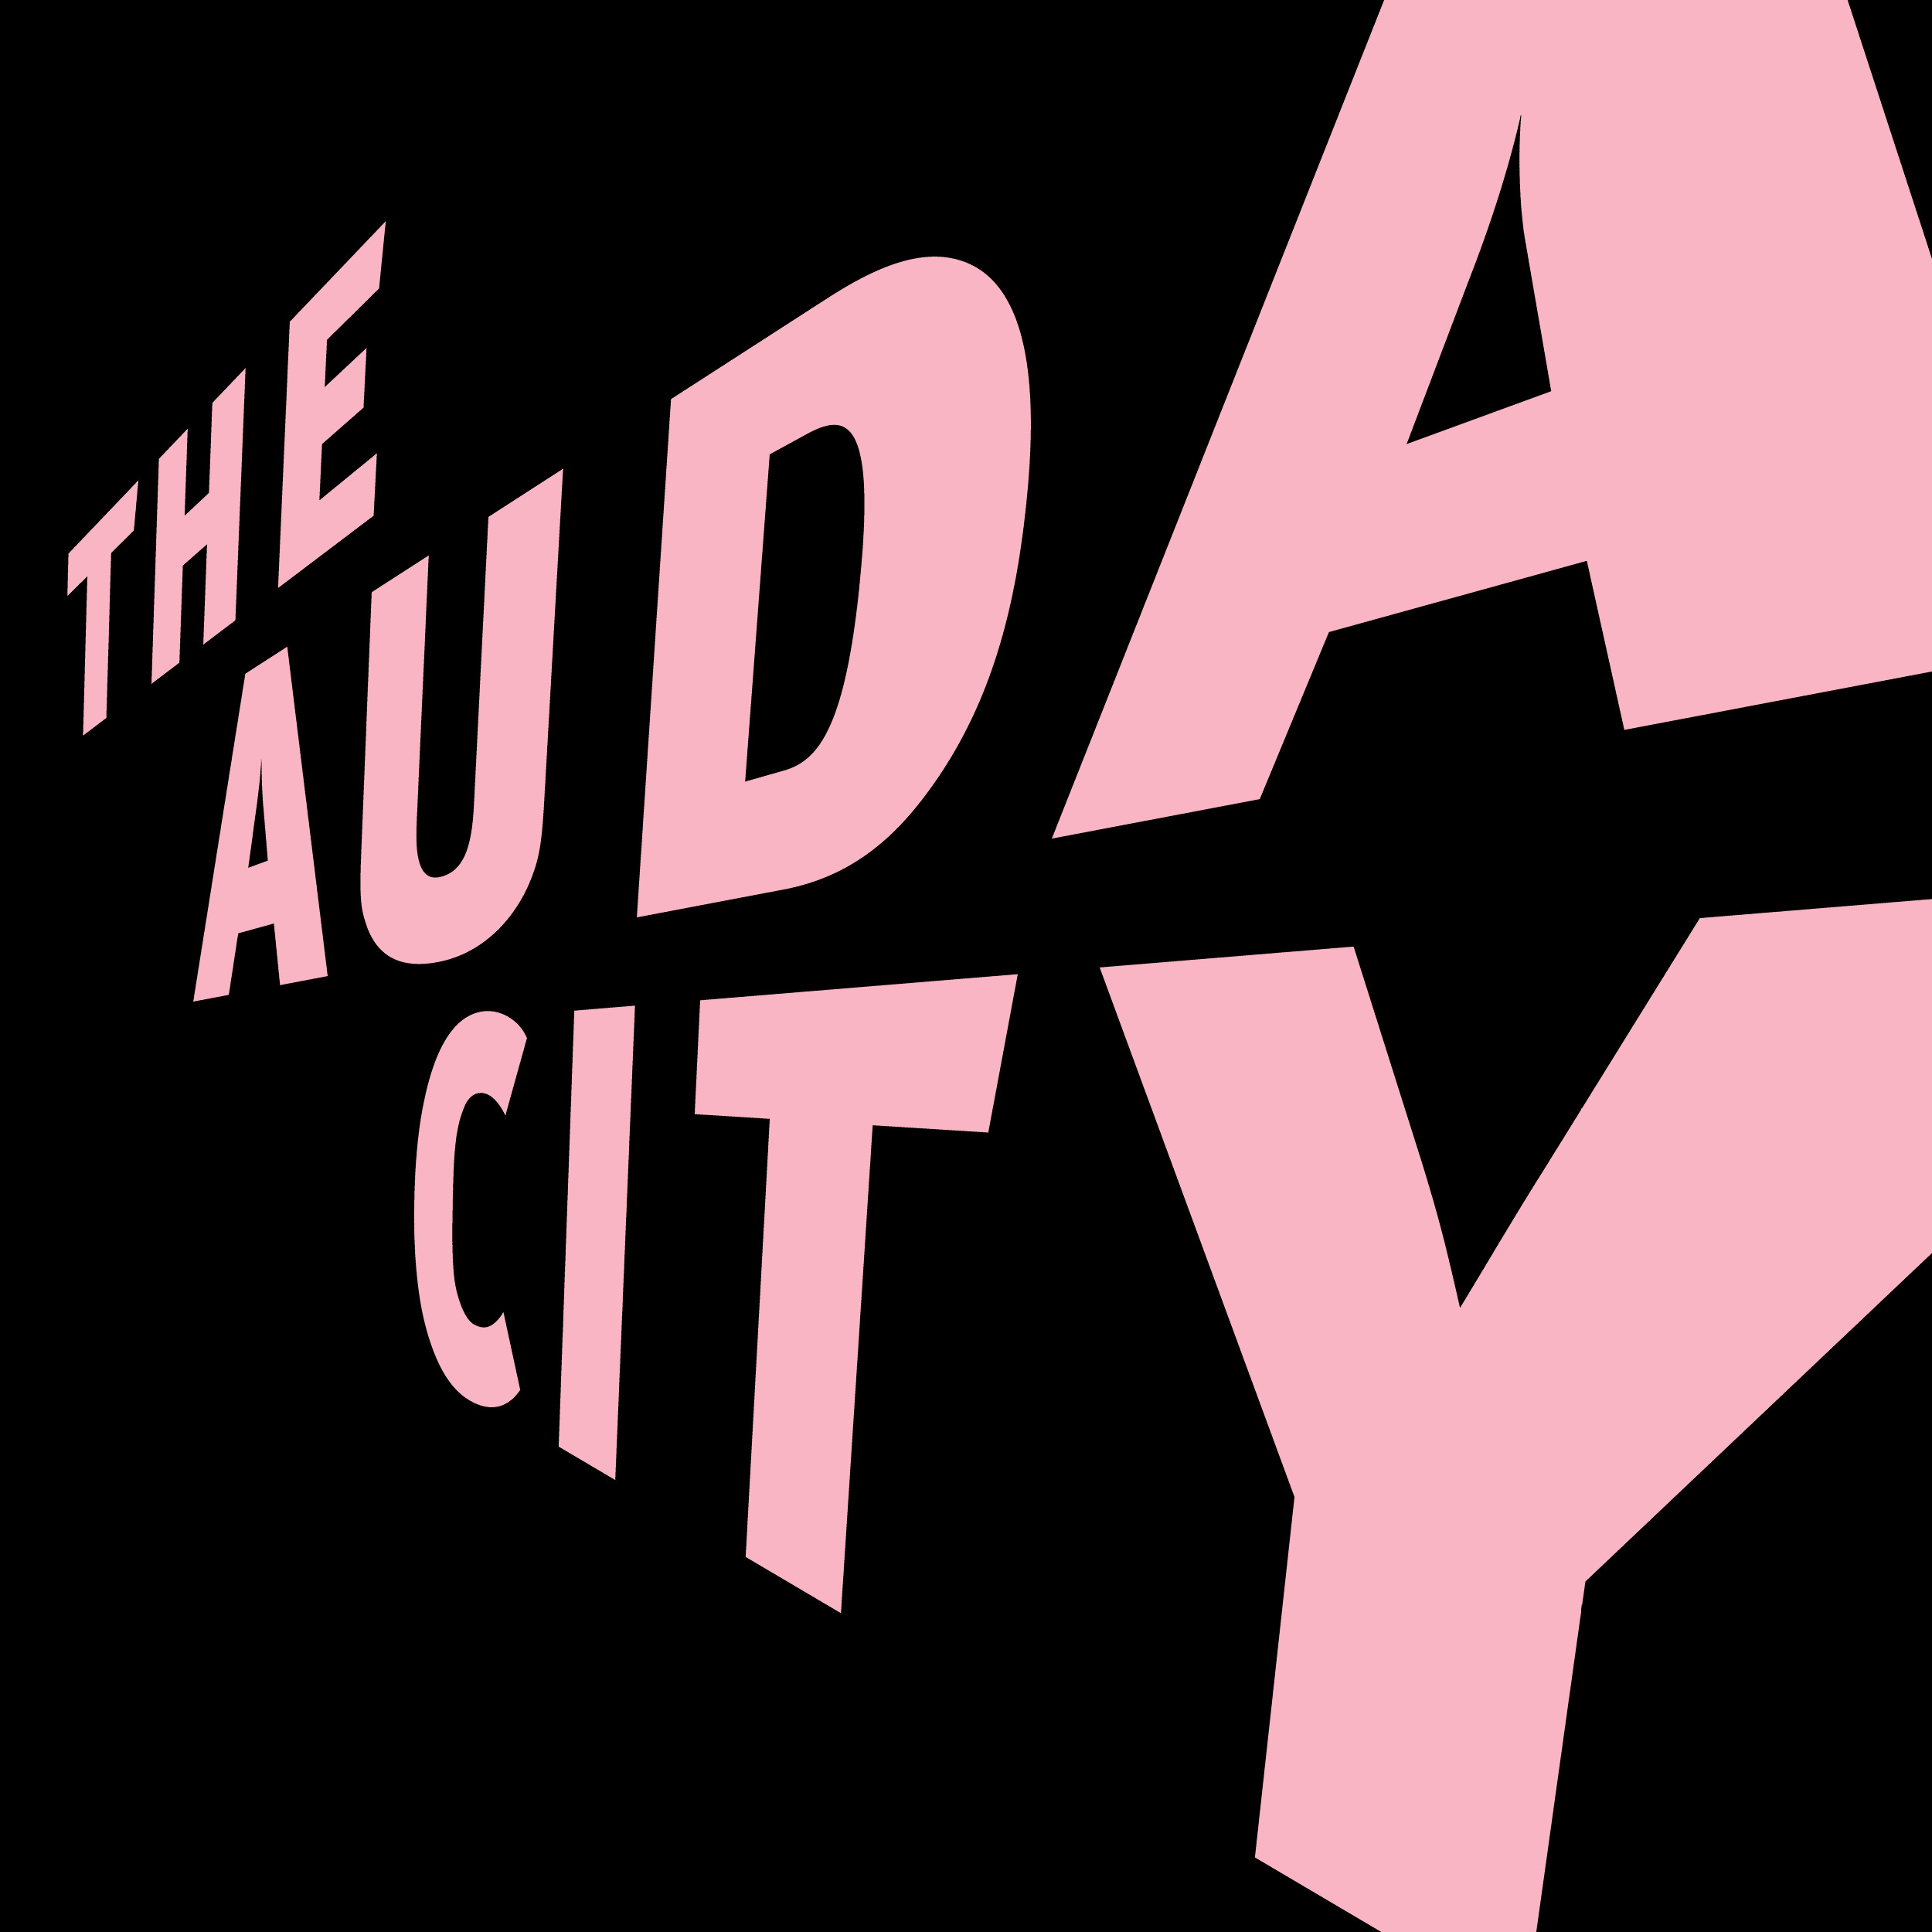 The Audacity logo